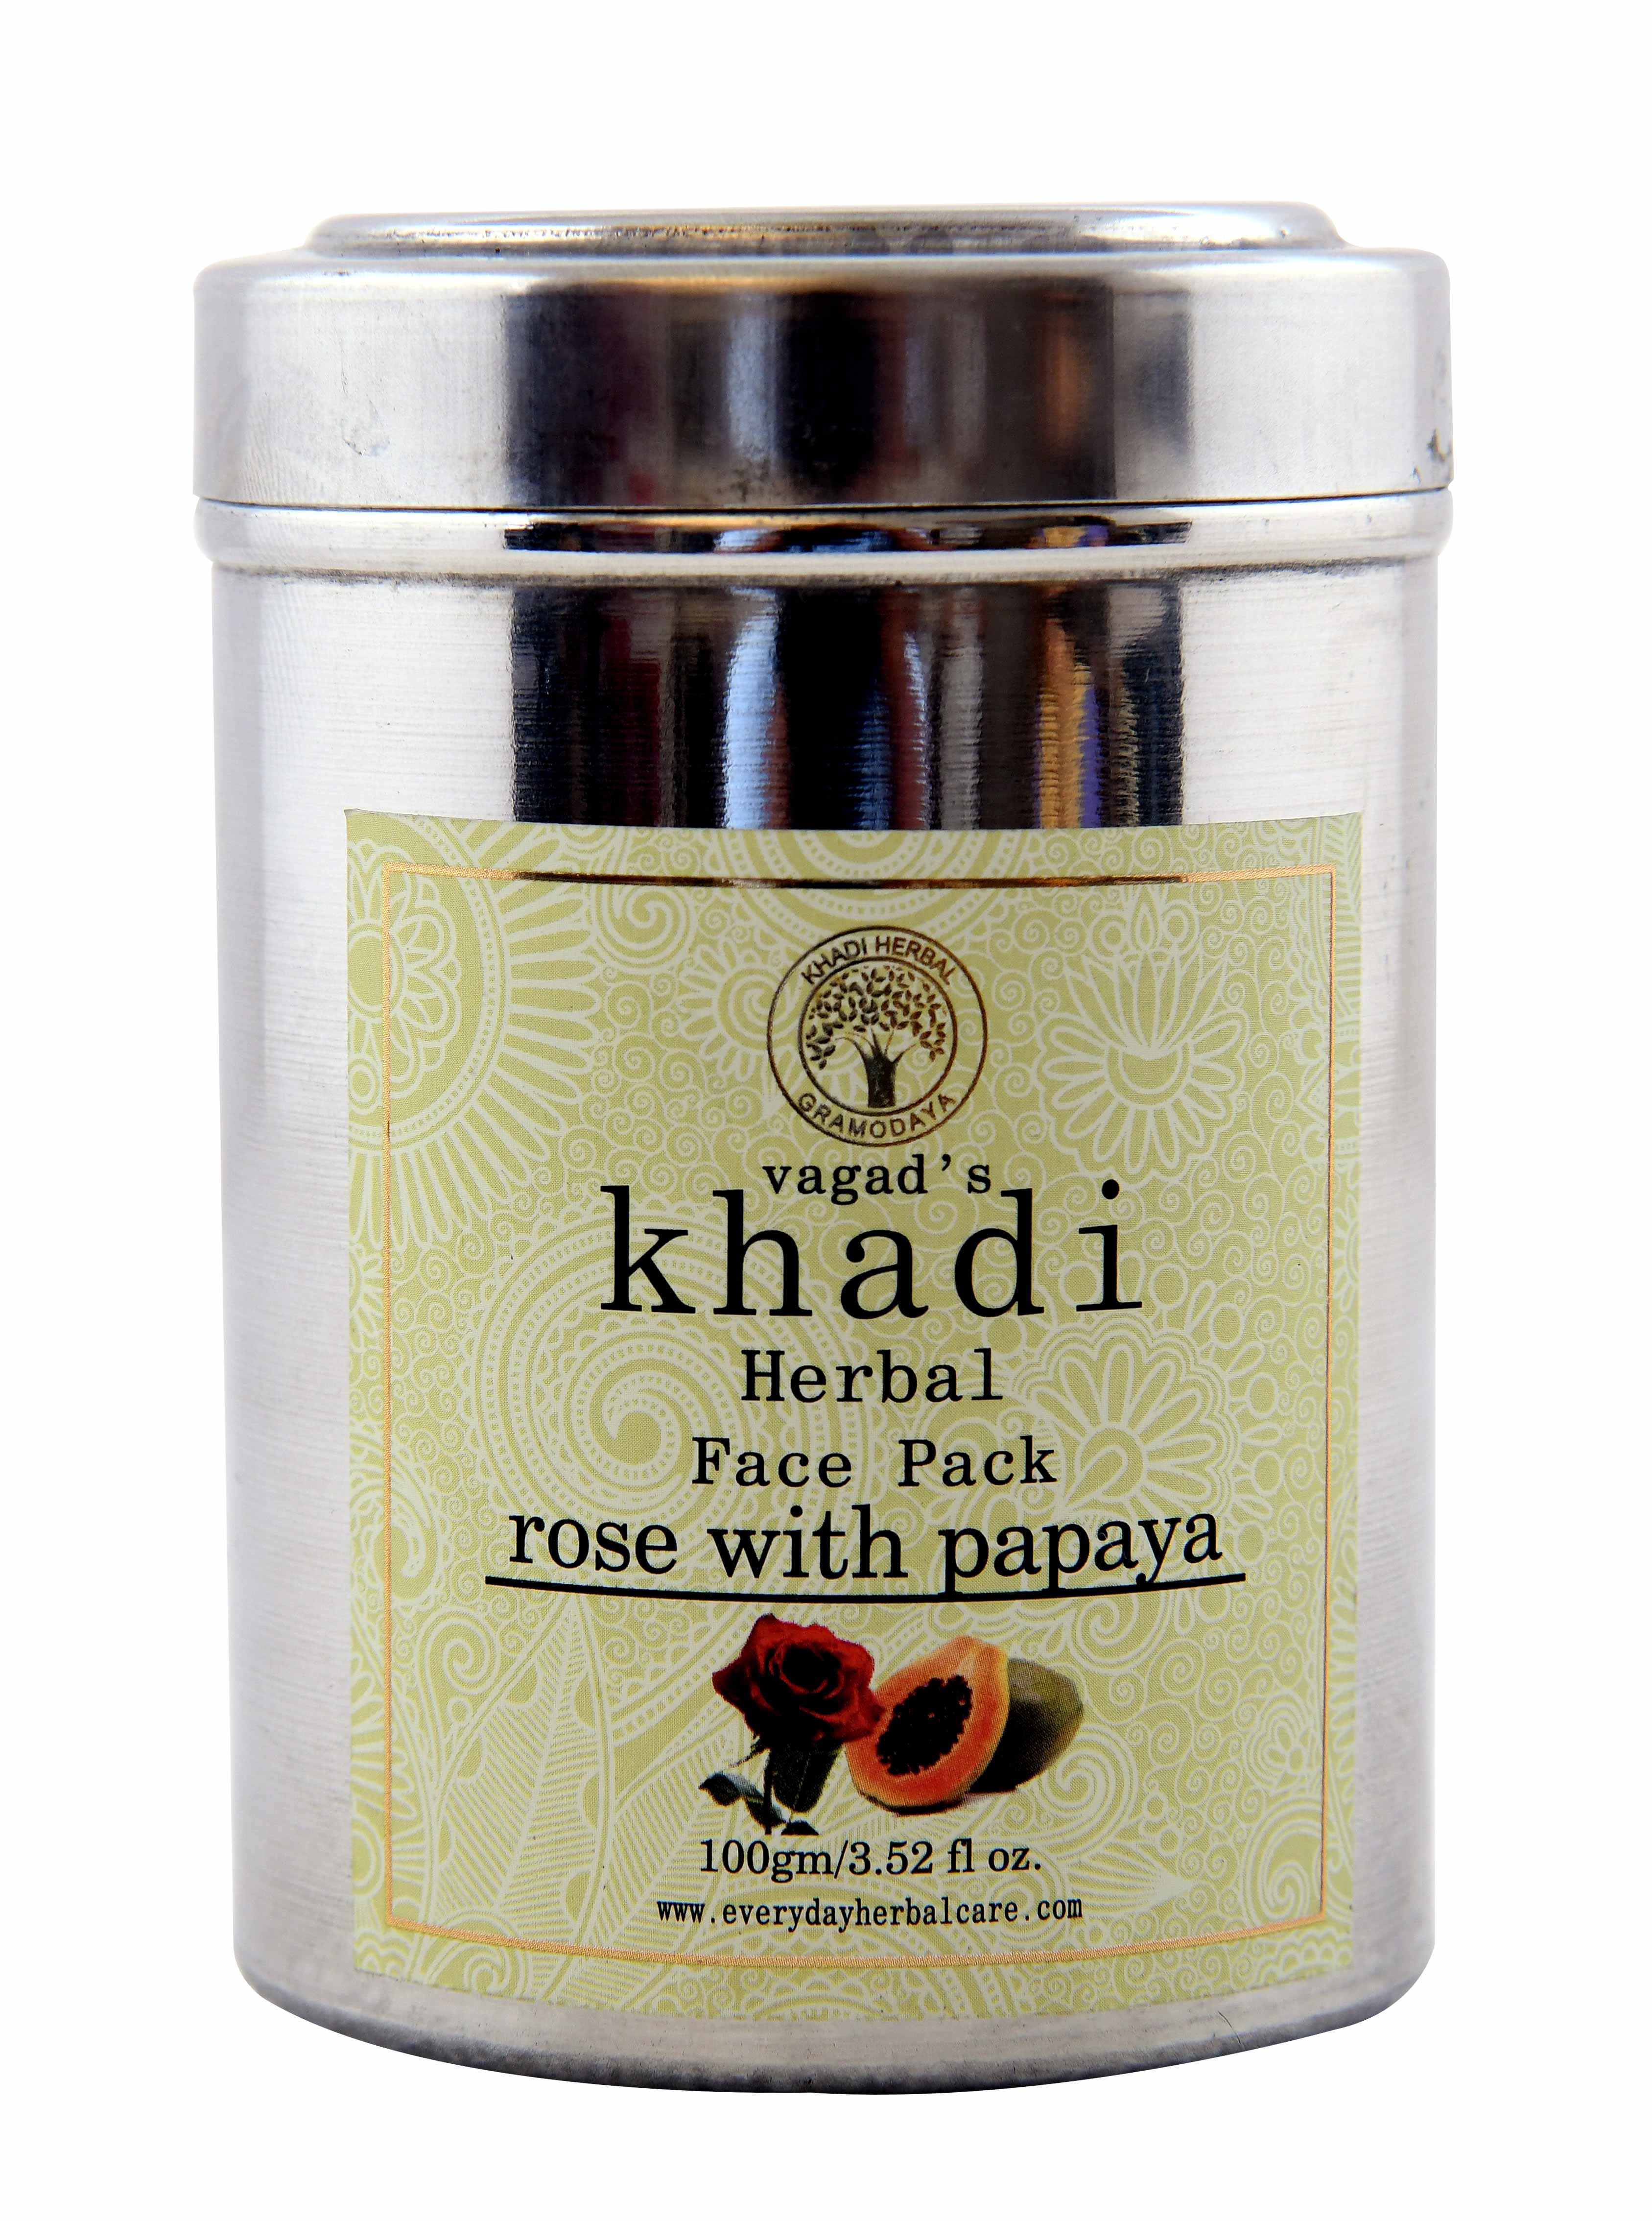 Buy Vagad's Khadi Rose With Papaya Face Pack at Best Price Online